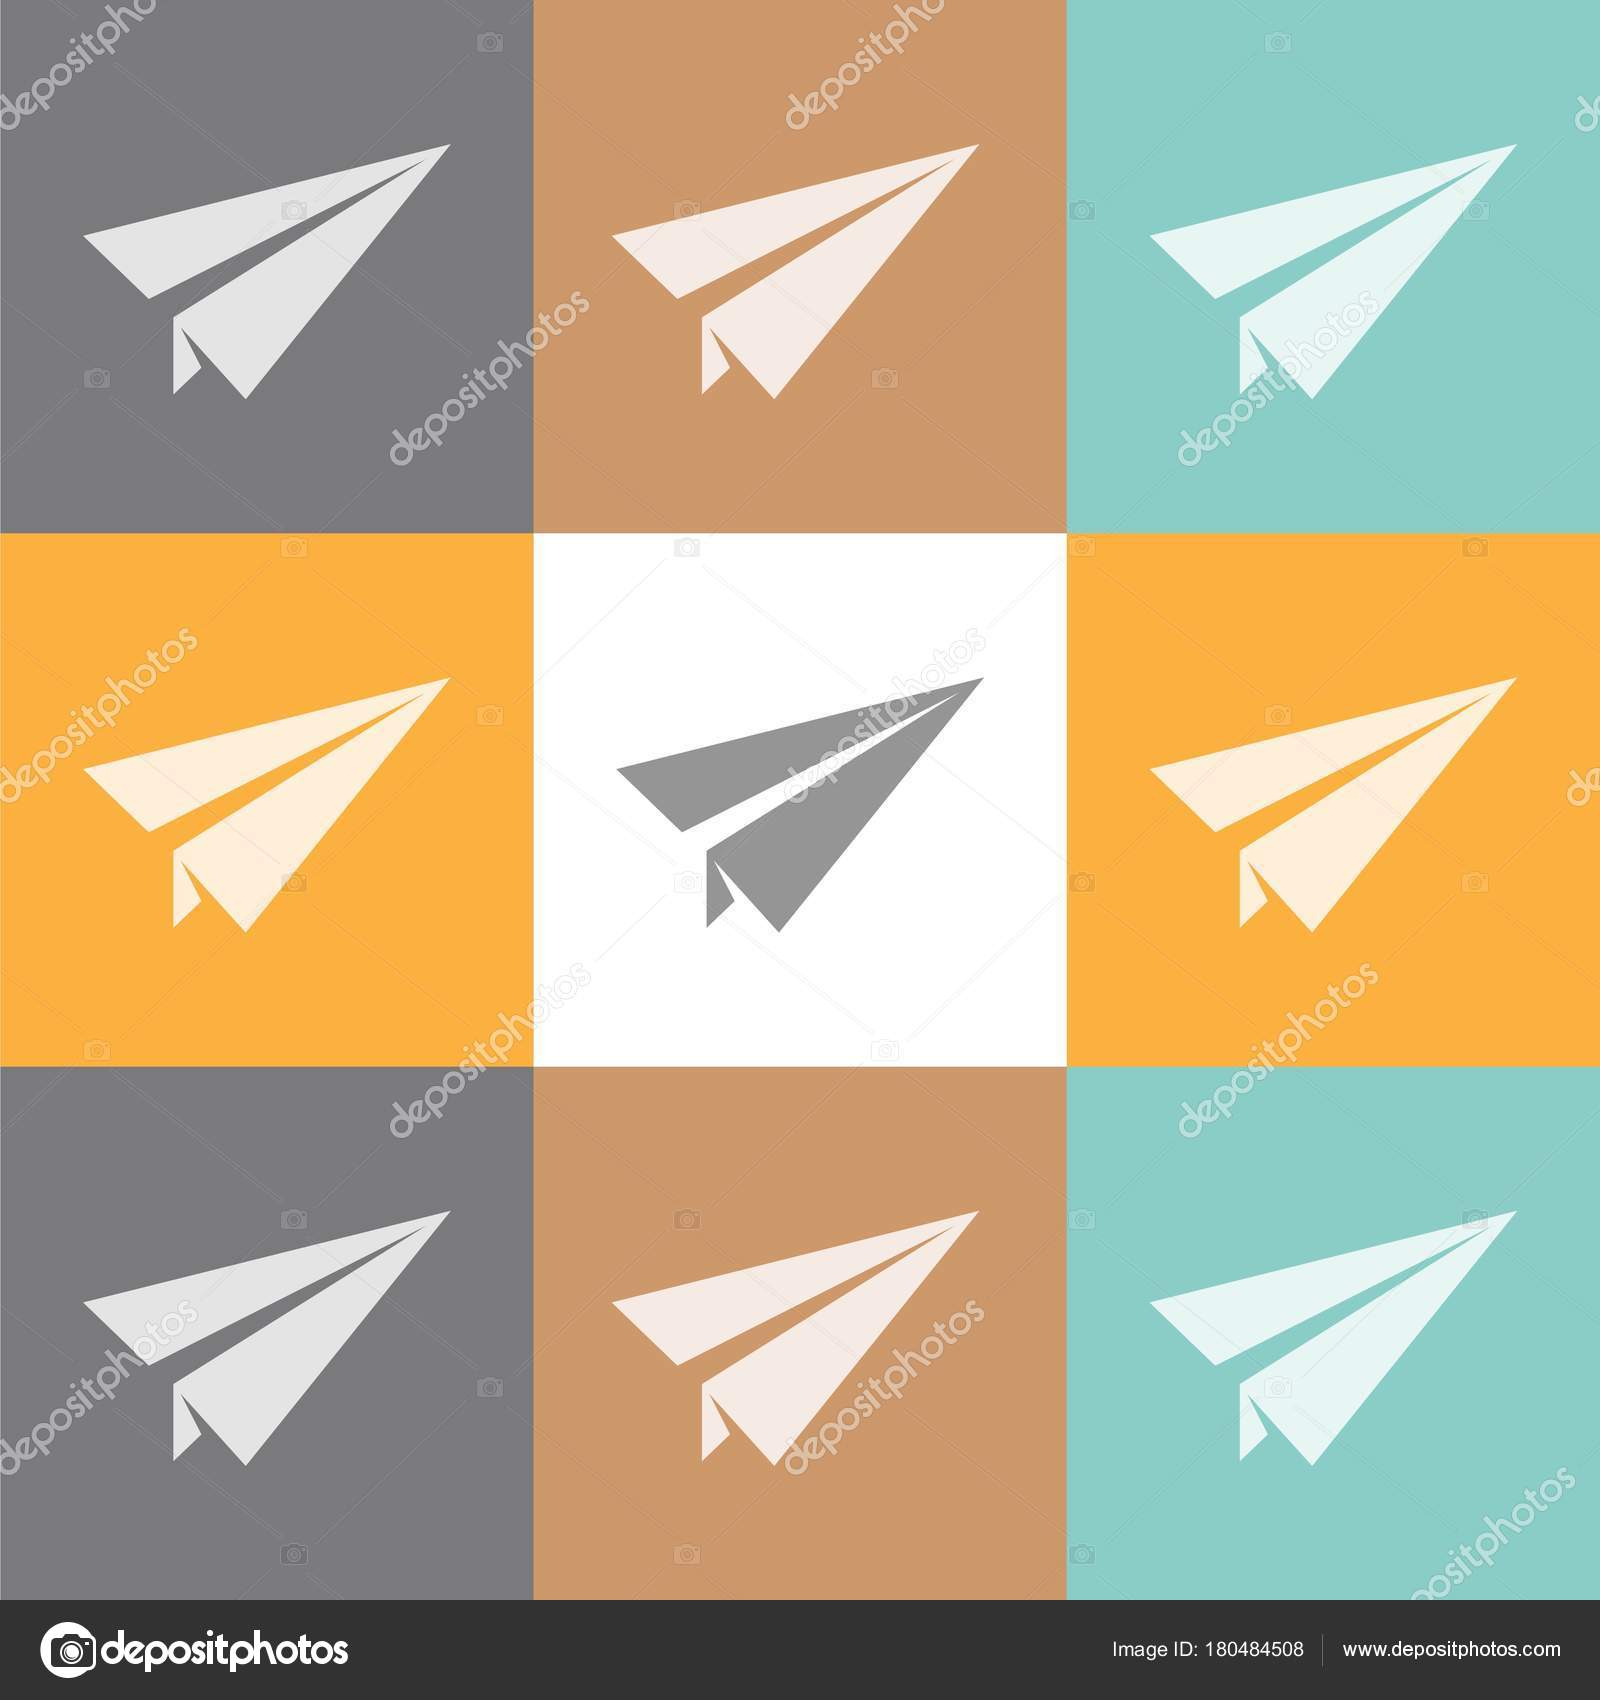 Origami Paper Airplanes Origami Paper Airplane Illustration Stock Photo Tetreb88 180484508